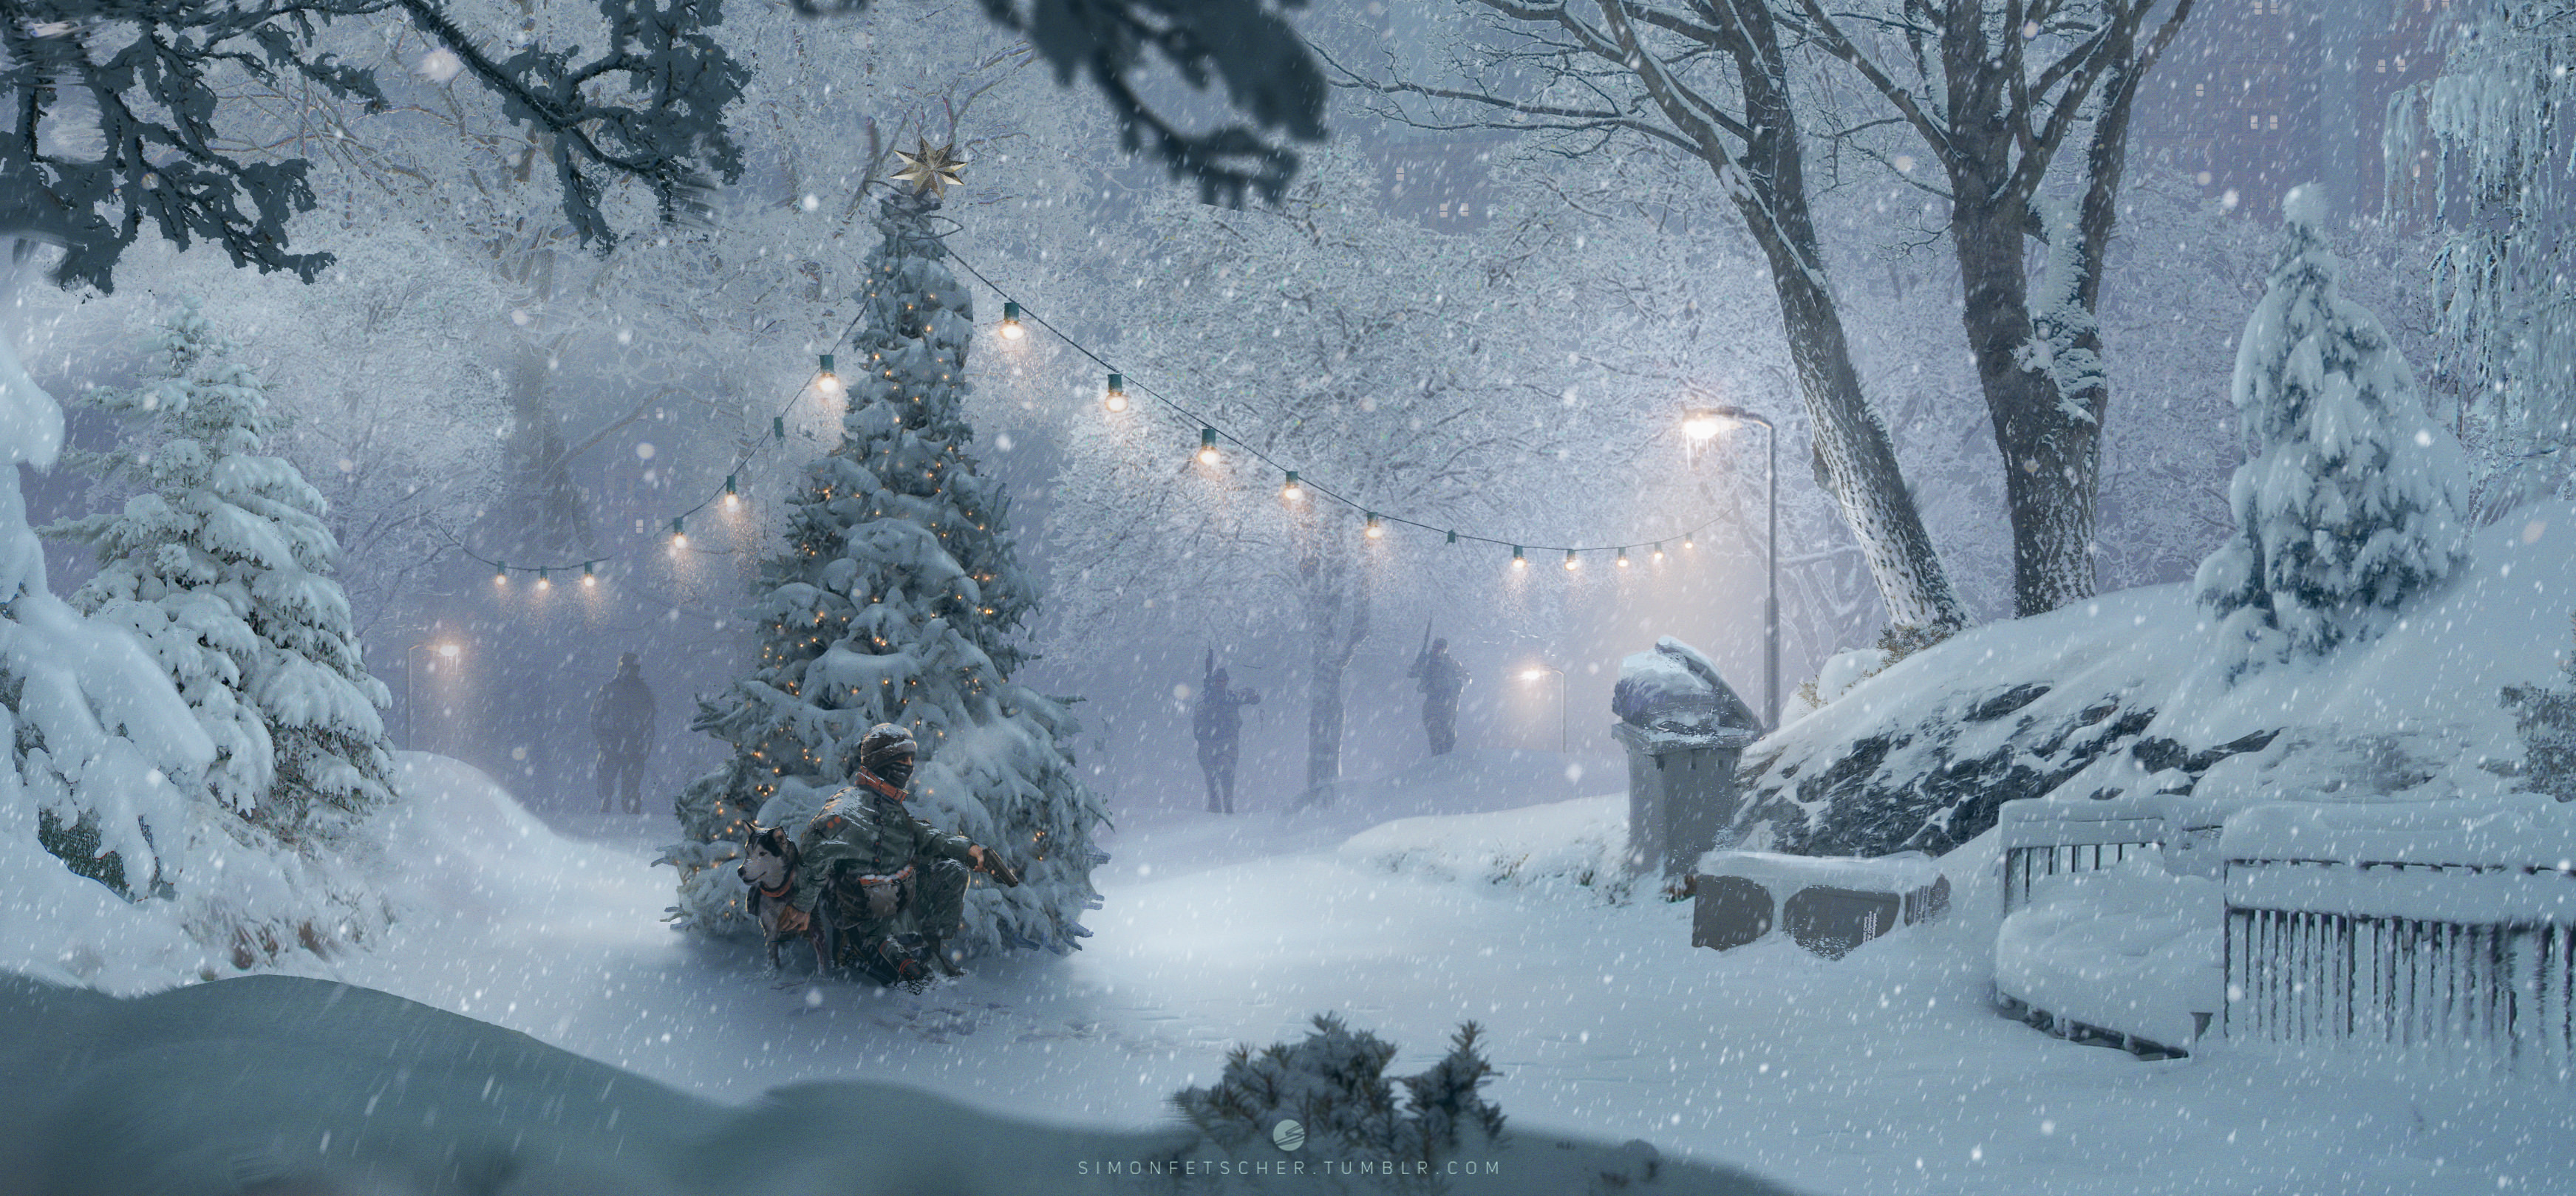 Snow Winter Artwork Dog Soldier Military Gun Lights Night Dark Snowing Trees Trash Christmas Lights  3486x1619